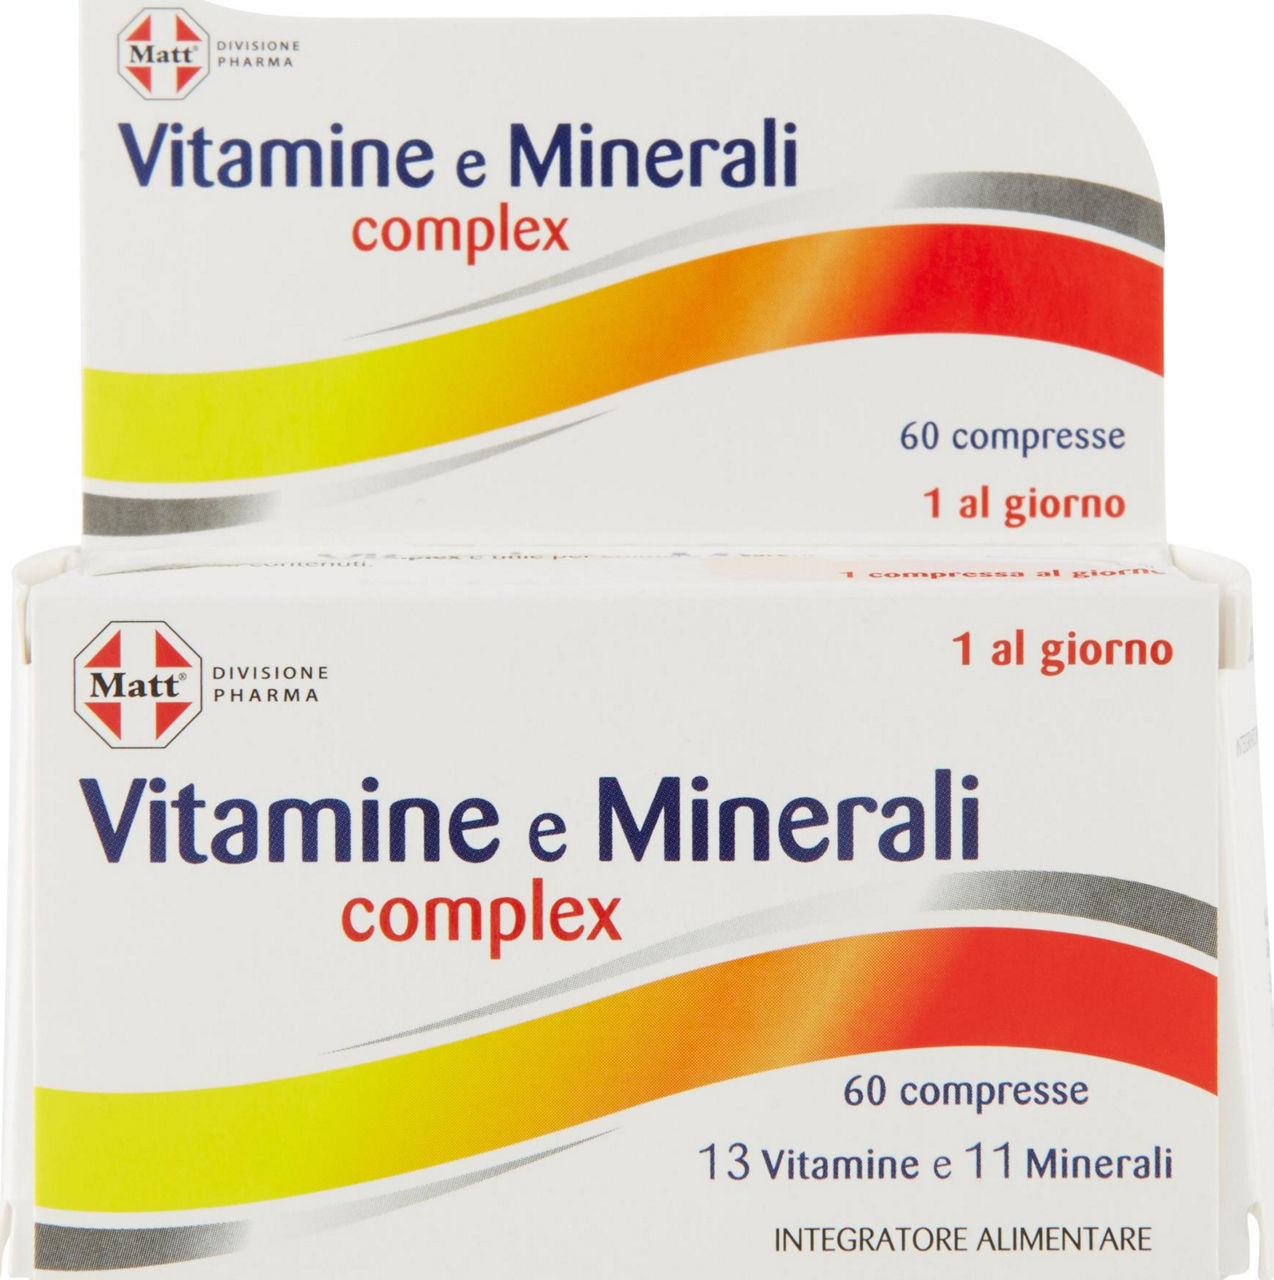 Multivita vitamine e minerali complex matt & diet pharma compresse pz.60 gr.79,8